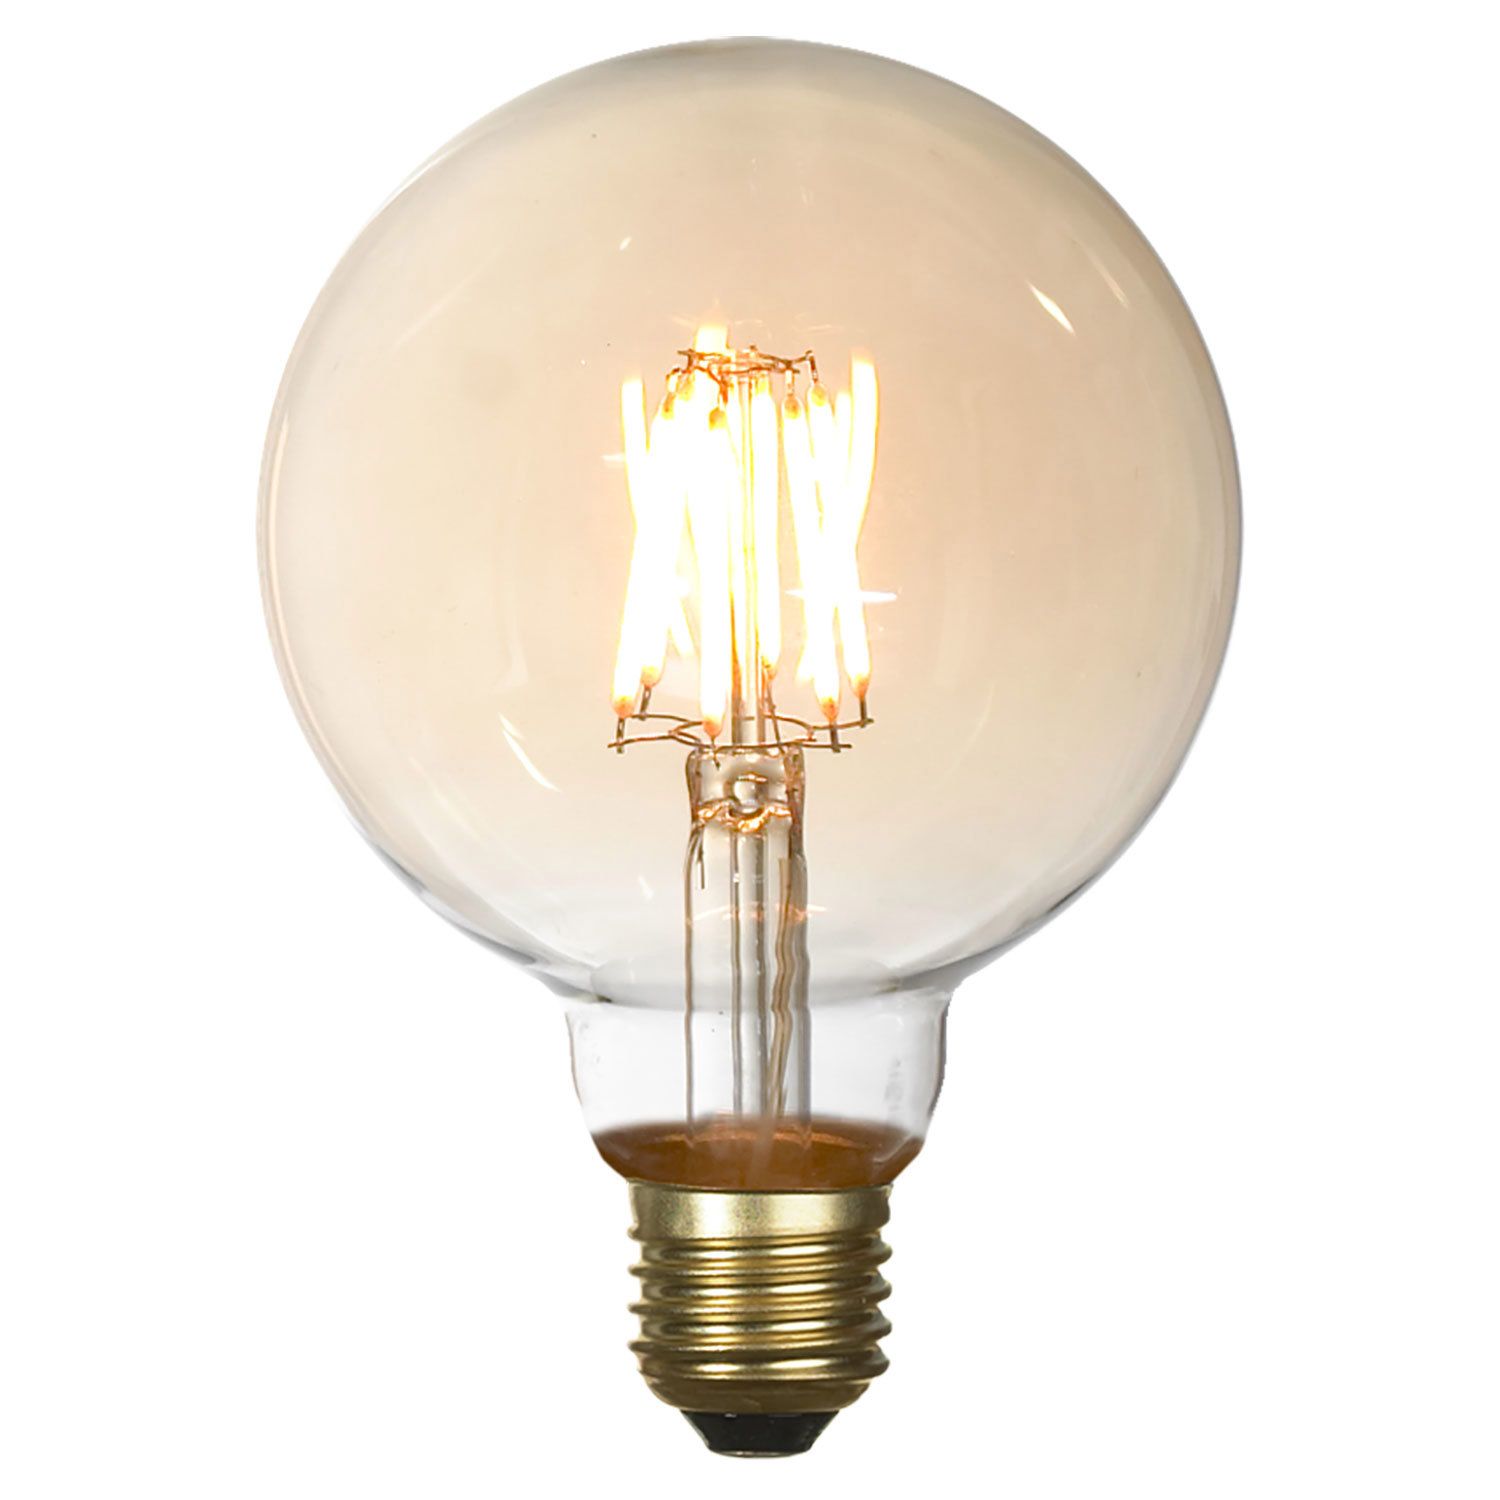 93714290 Лампа светодиодная Edisson GF-L-2106 E27 220 В 6 Вт шар теплый белый (желтый) STLM-0552500 LUSSOLE